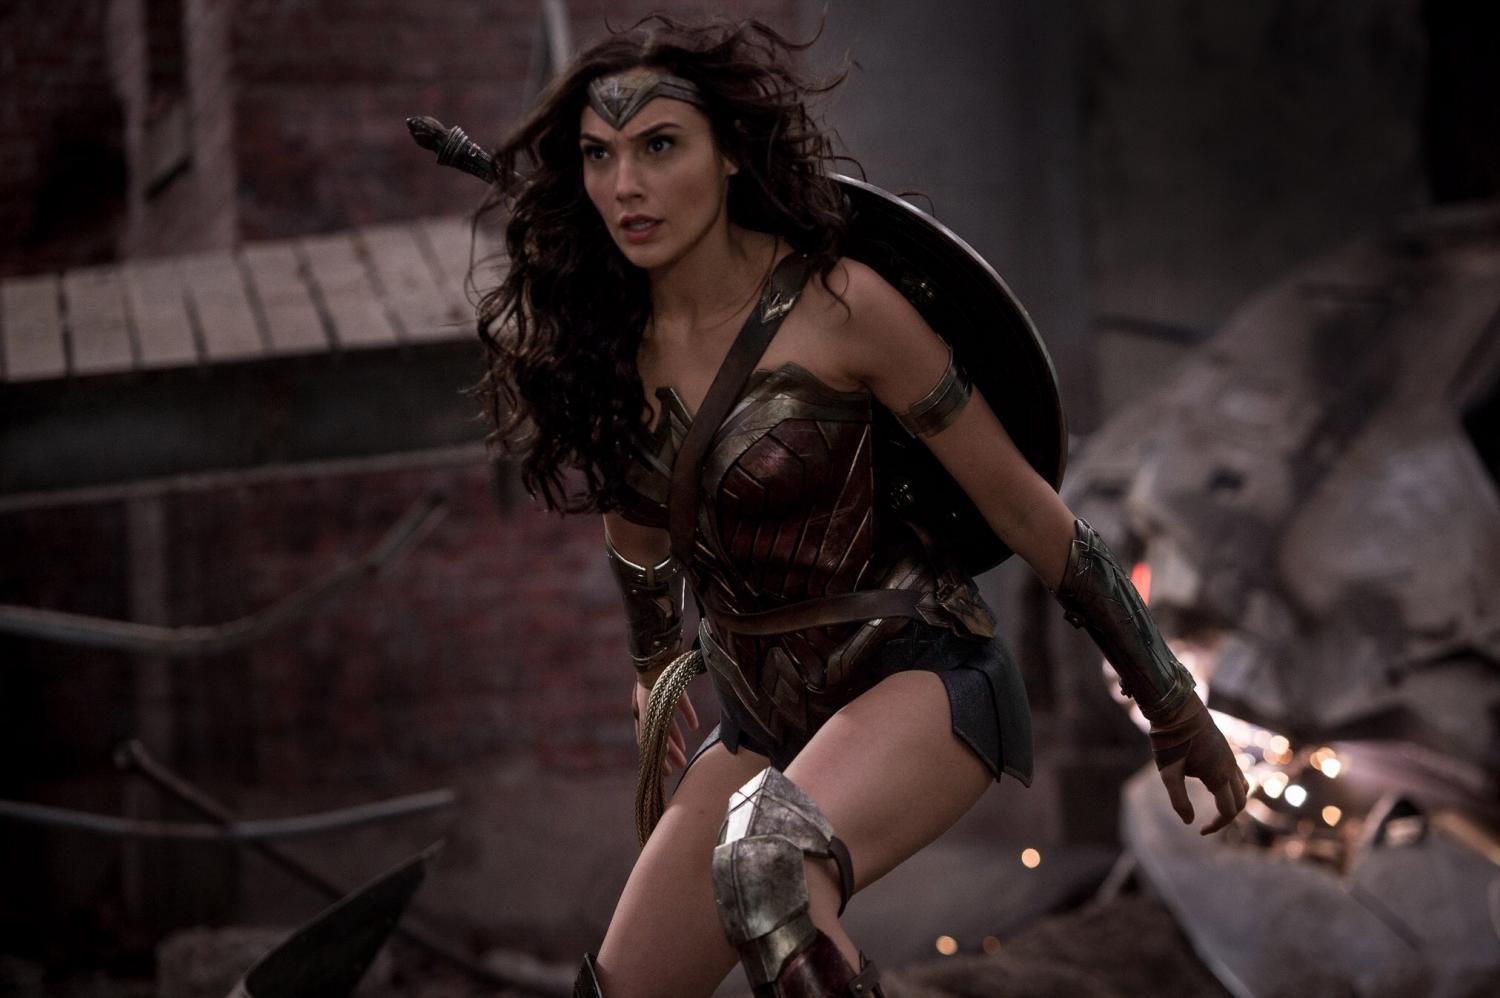 Film Review: Wonder Woman